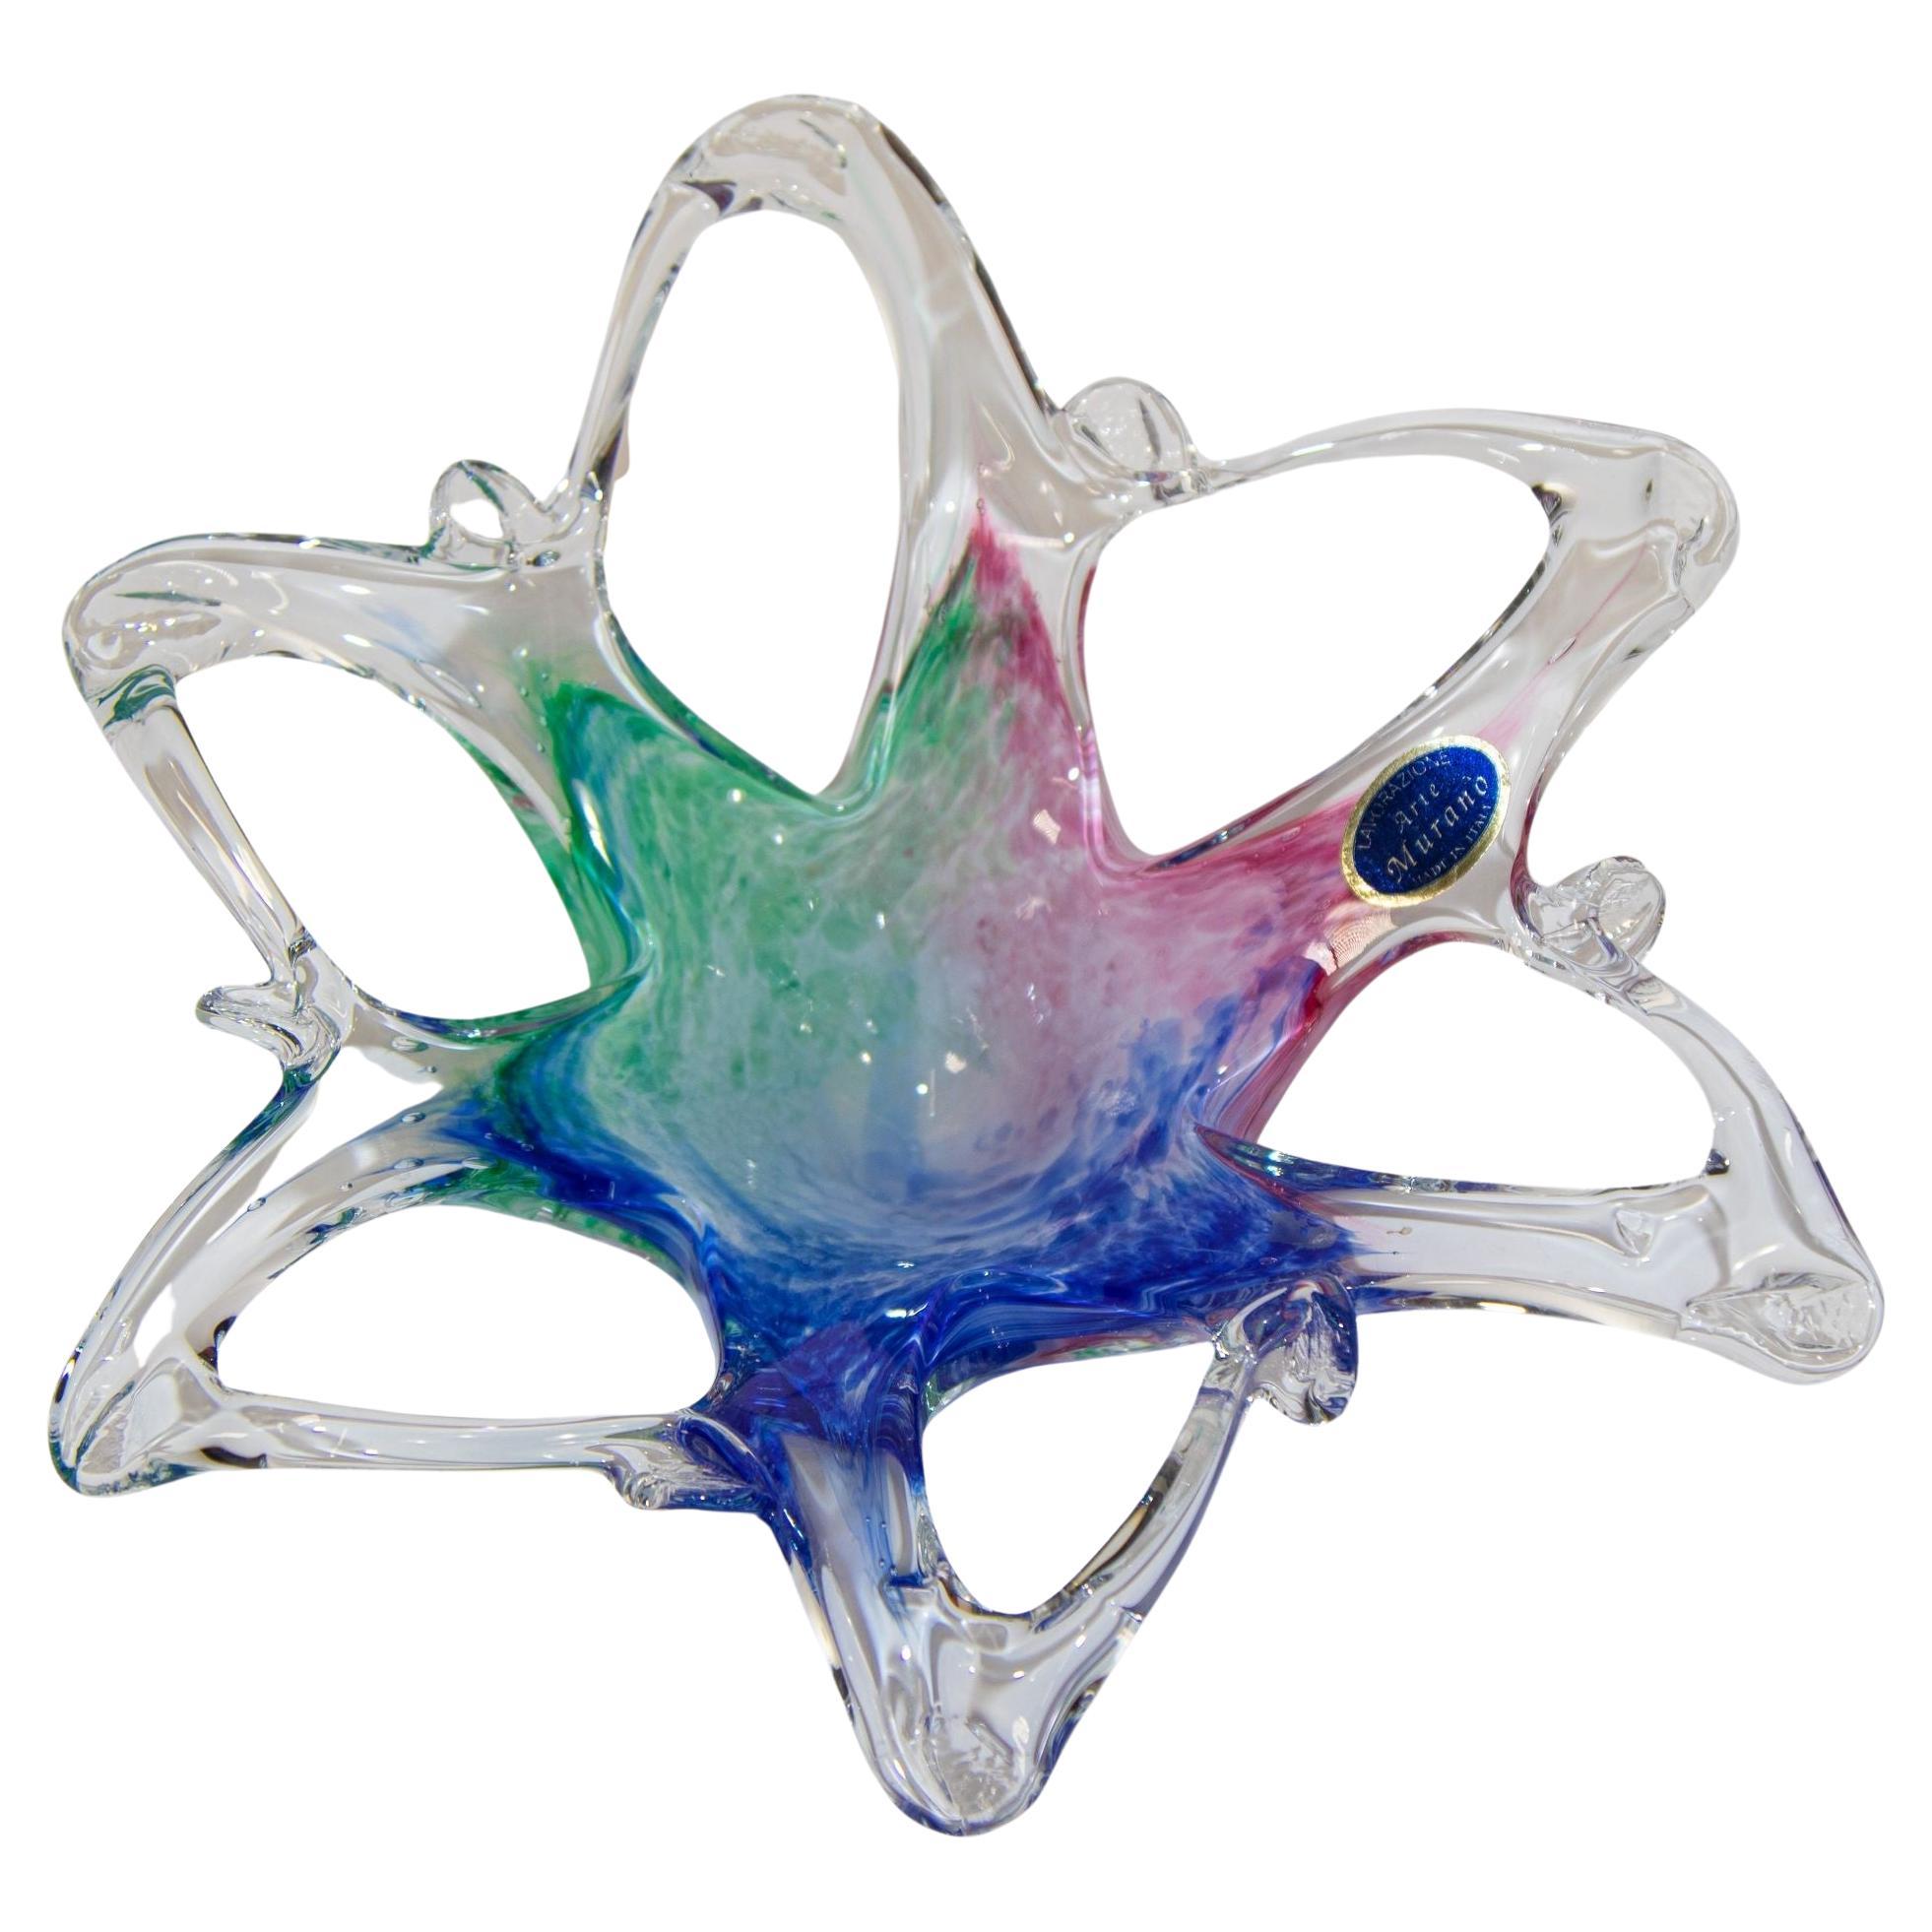 Vintage Murano Star Flower Shape Art Glass Dish, Italy